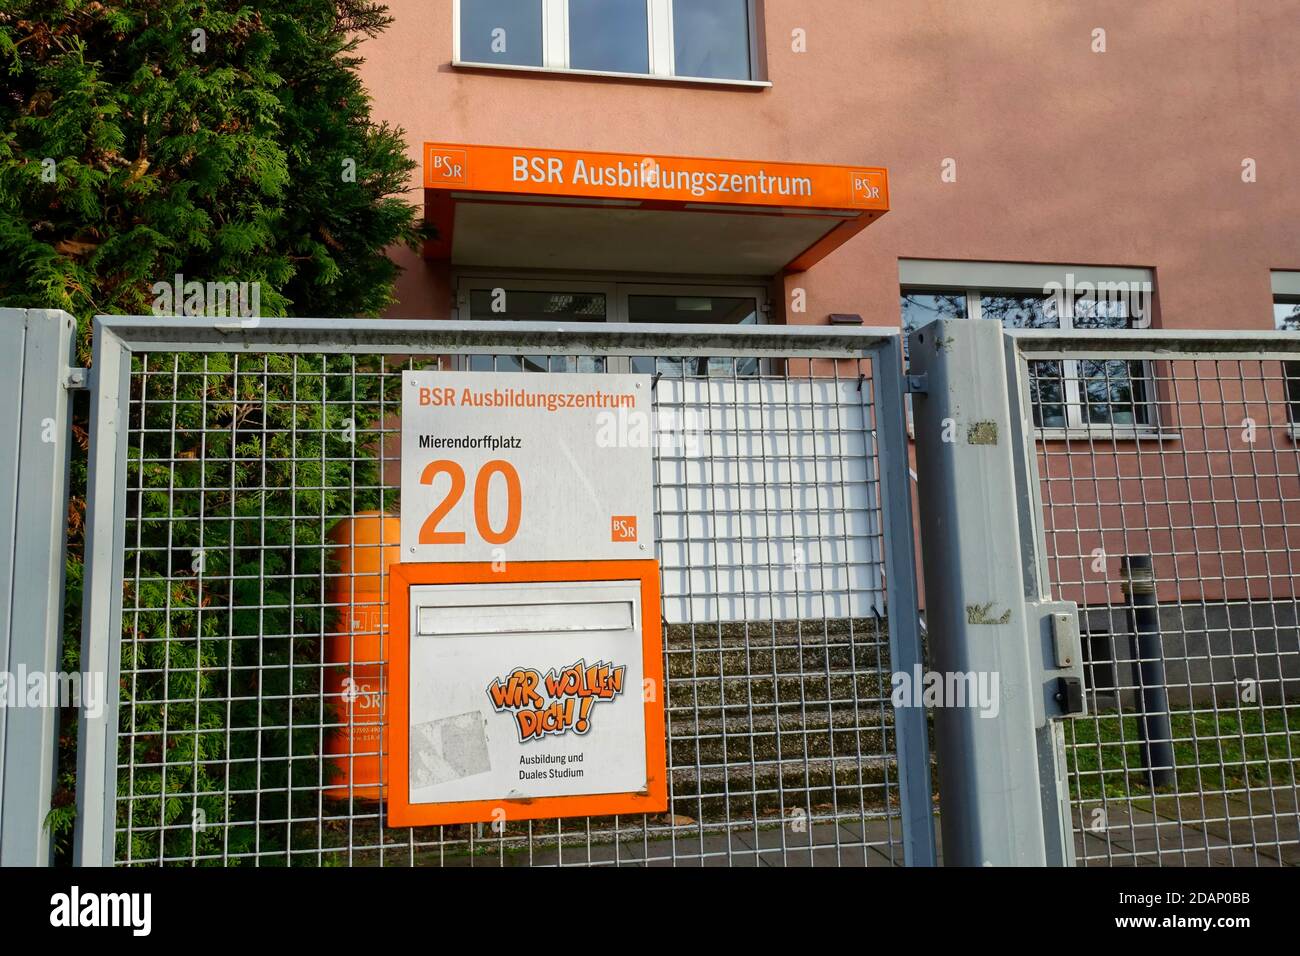 BSR training center, Berlin, Germany Stock Photo